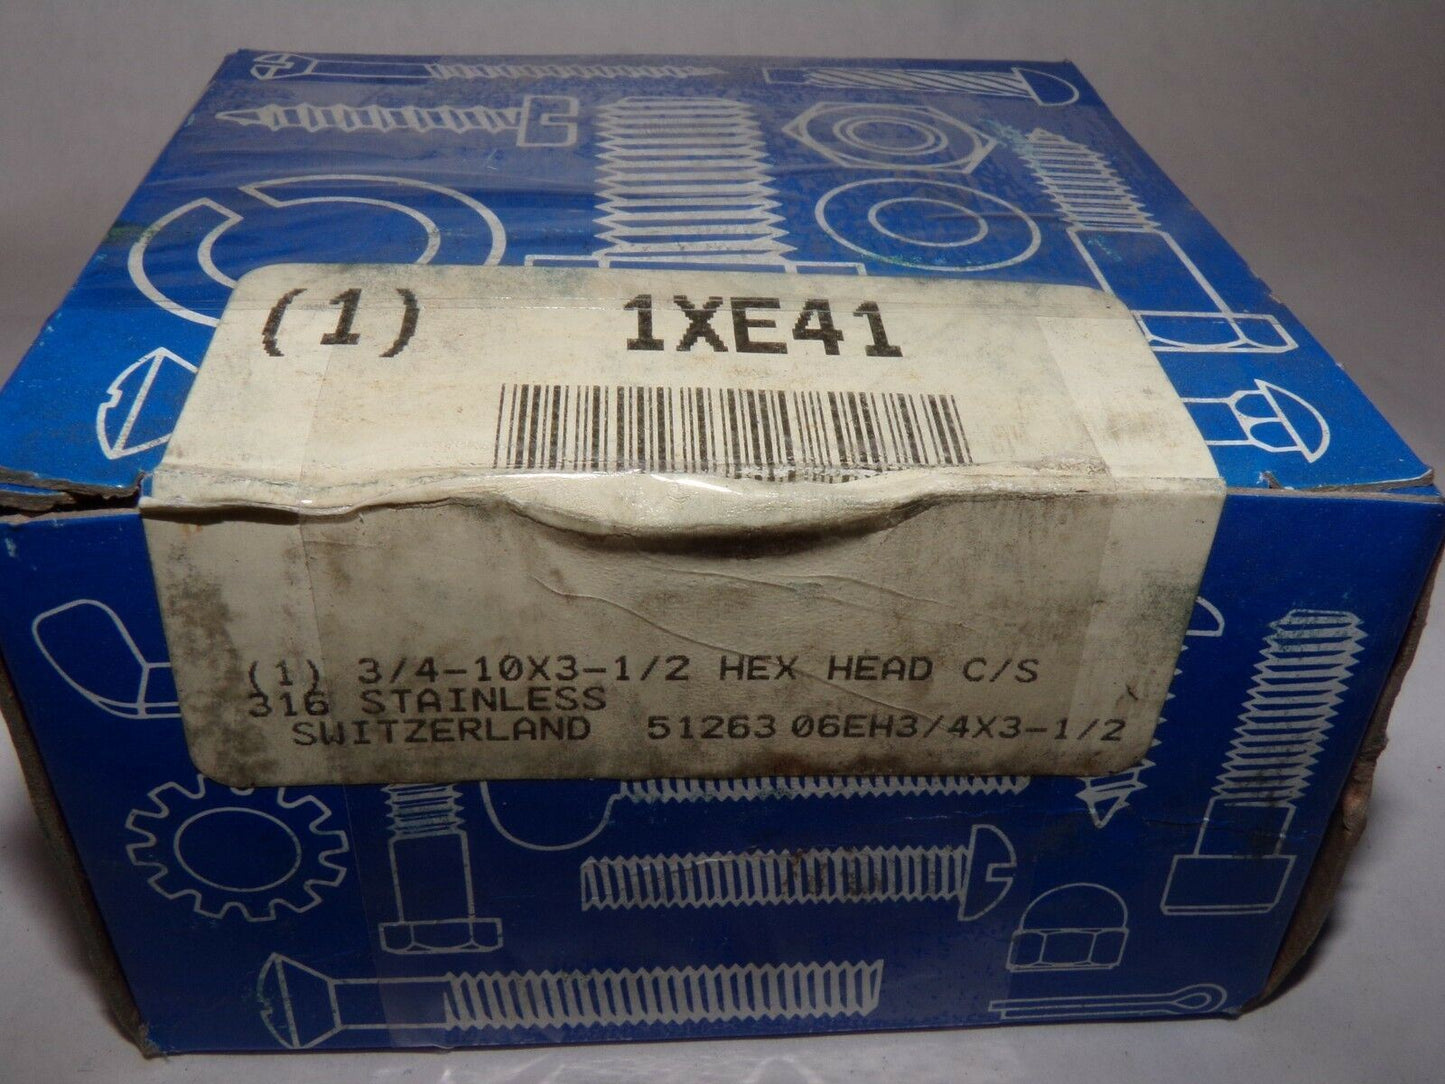 3/4-10 x 3-1/2" Hex Head Cap Screws 316 Stainless Steel QTY-1 1XE41 (183418166405-WT30)